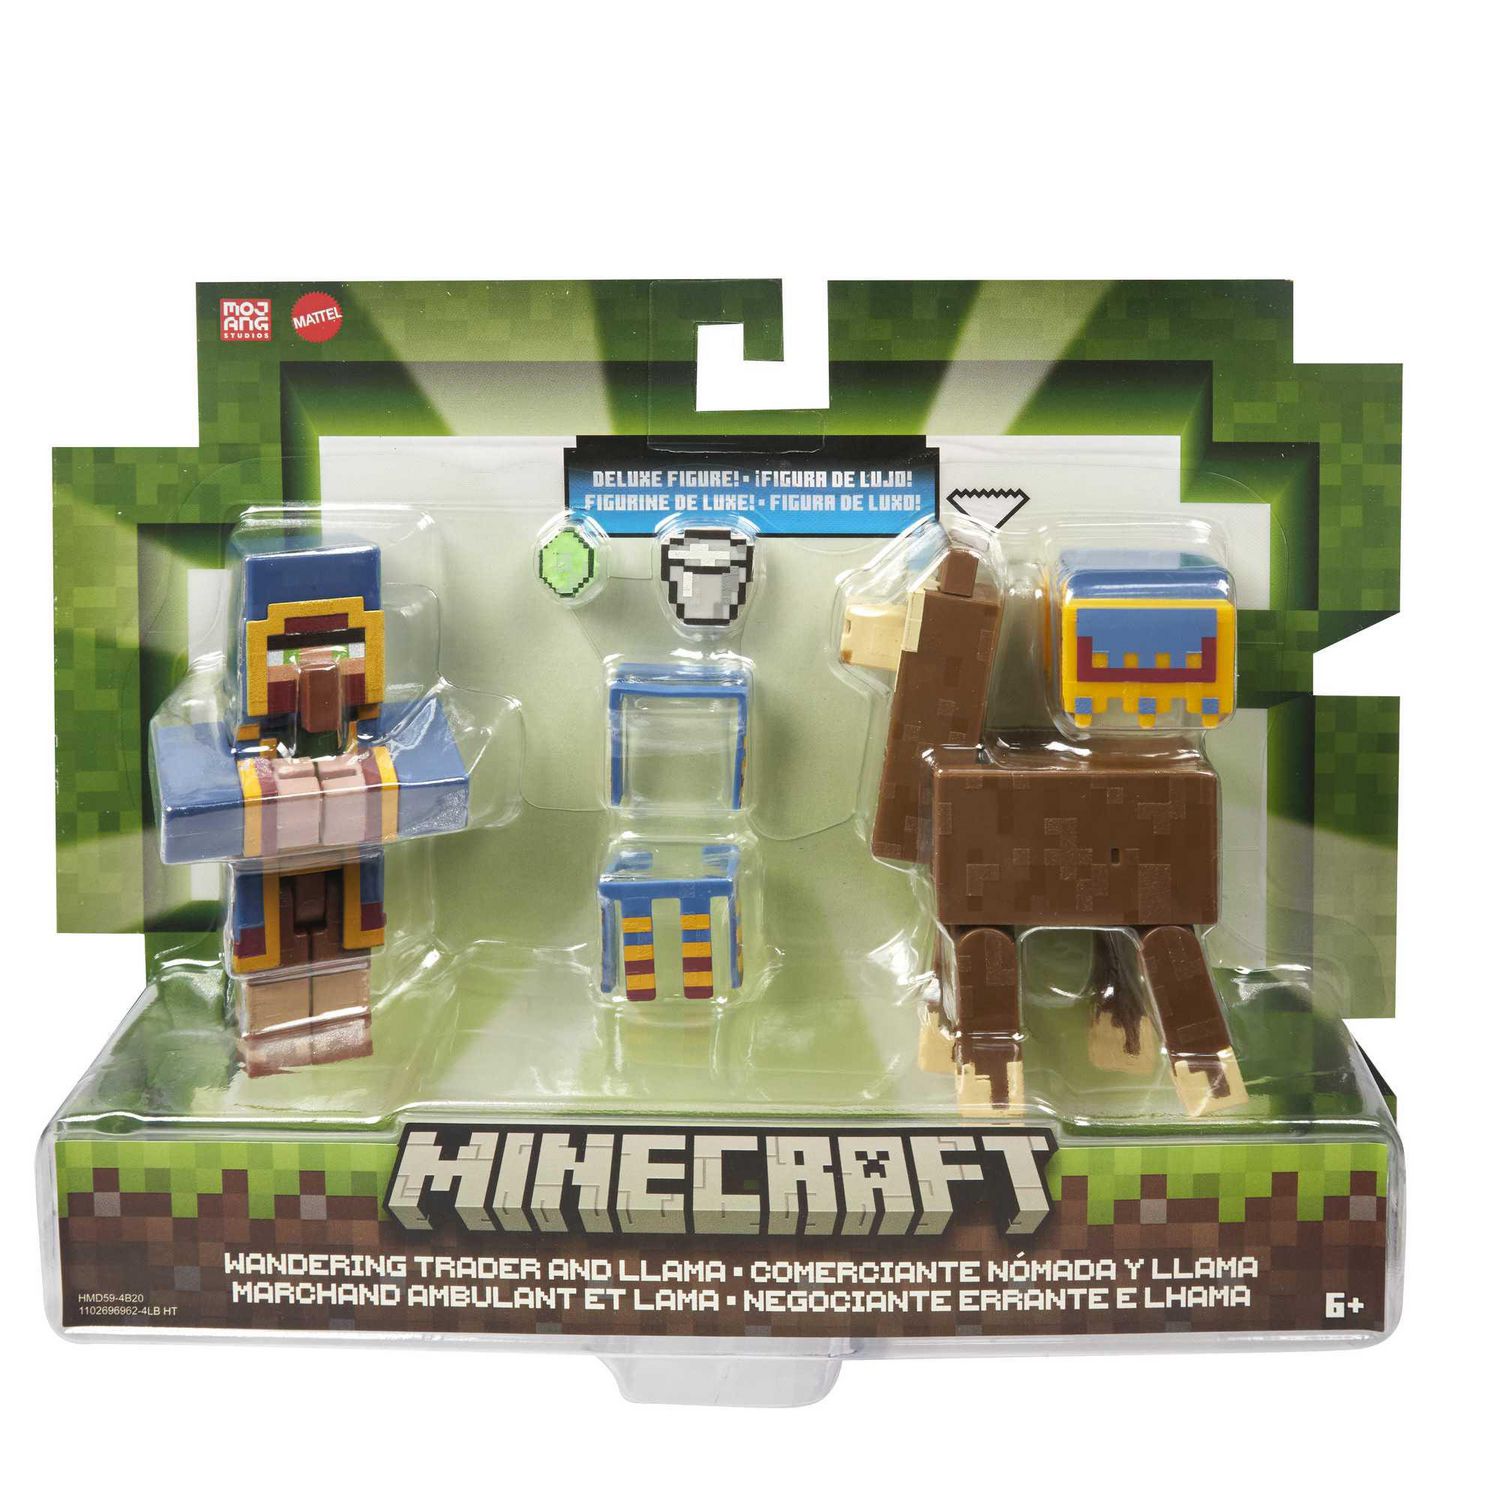 Figurines Minecraft : Coffret 6 animaux Série 2 Giochi Preziosi en